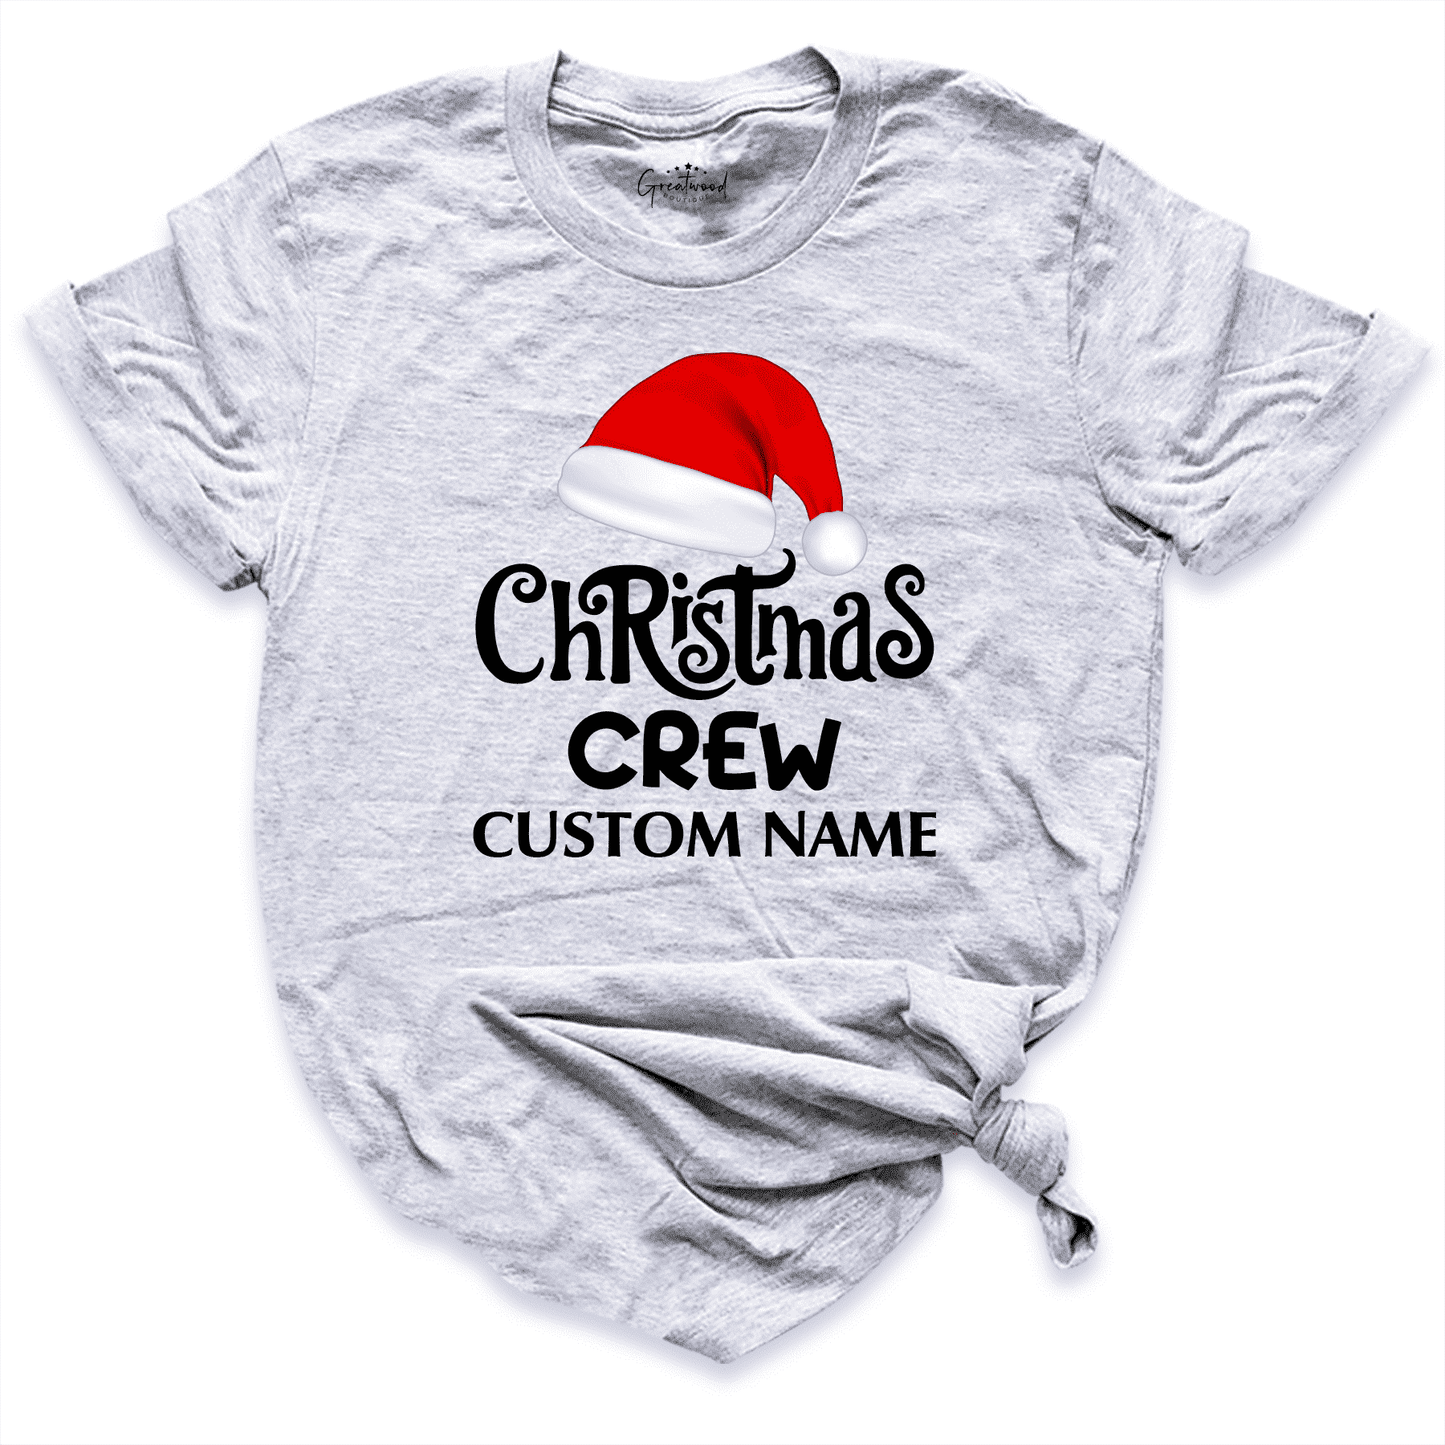 Custom Name Christmas Crew Shirt Grey - Greatwood Boutique